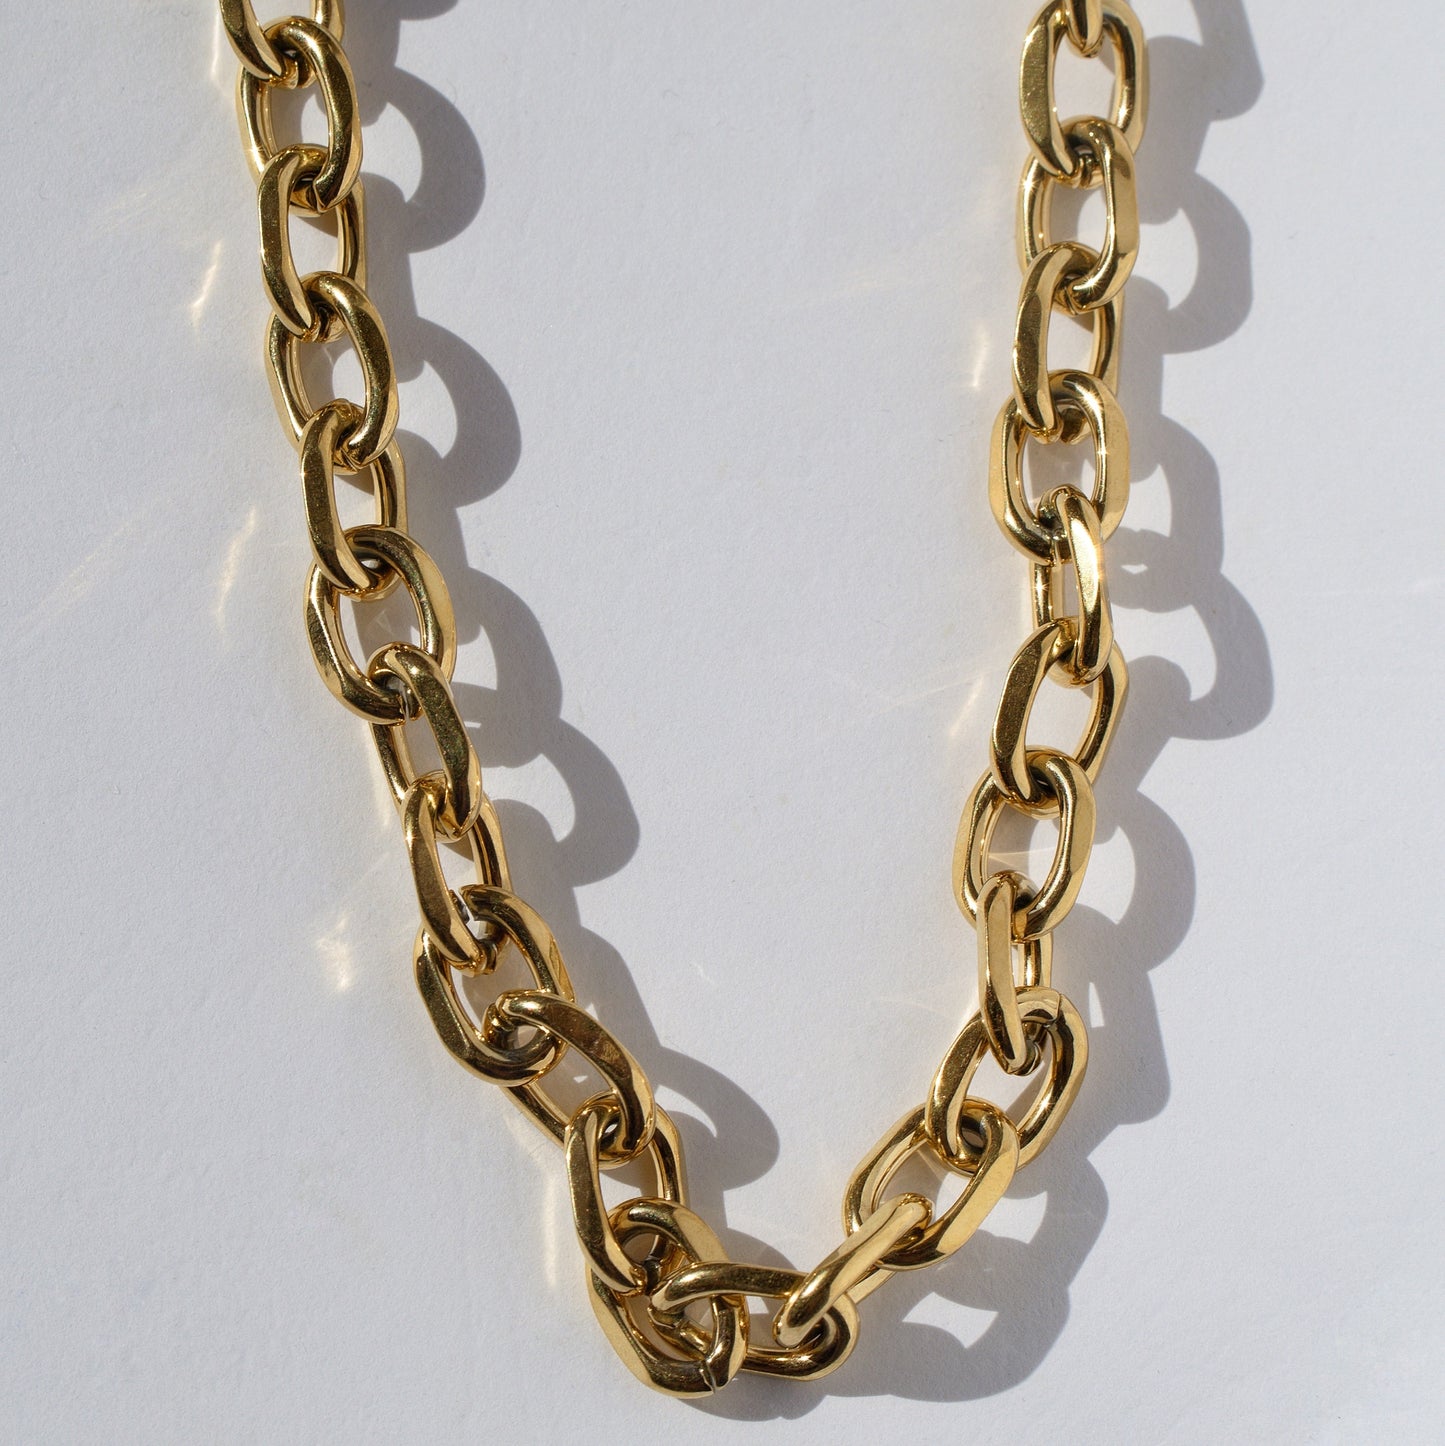 Vintage chain necklace